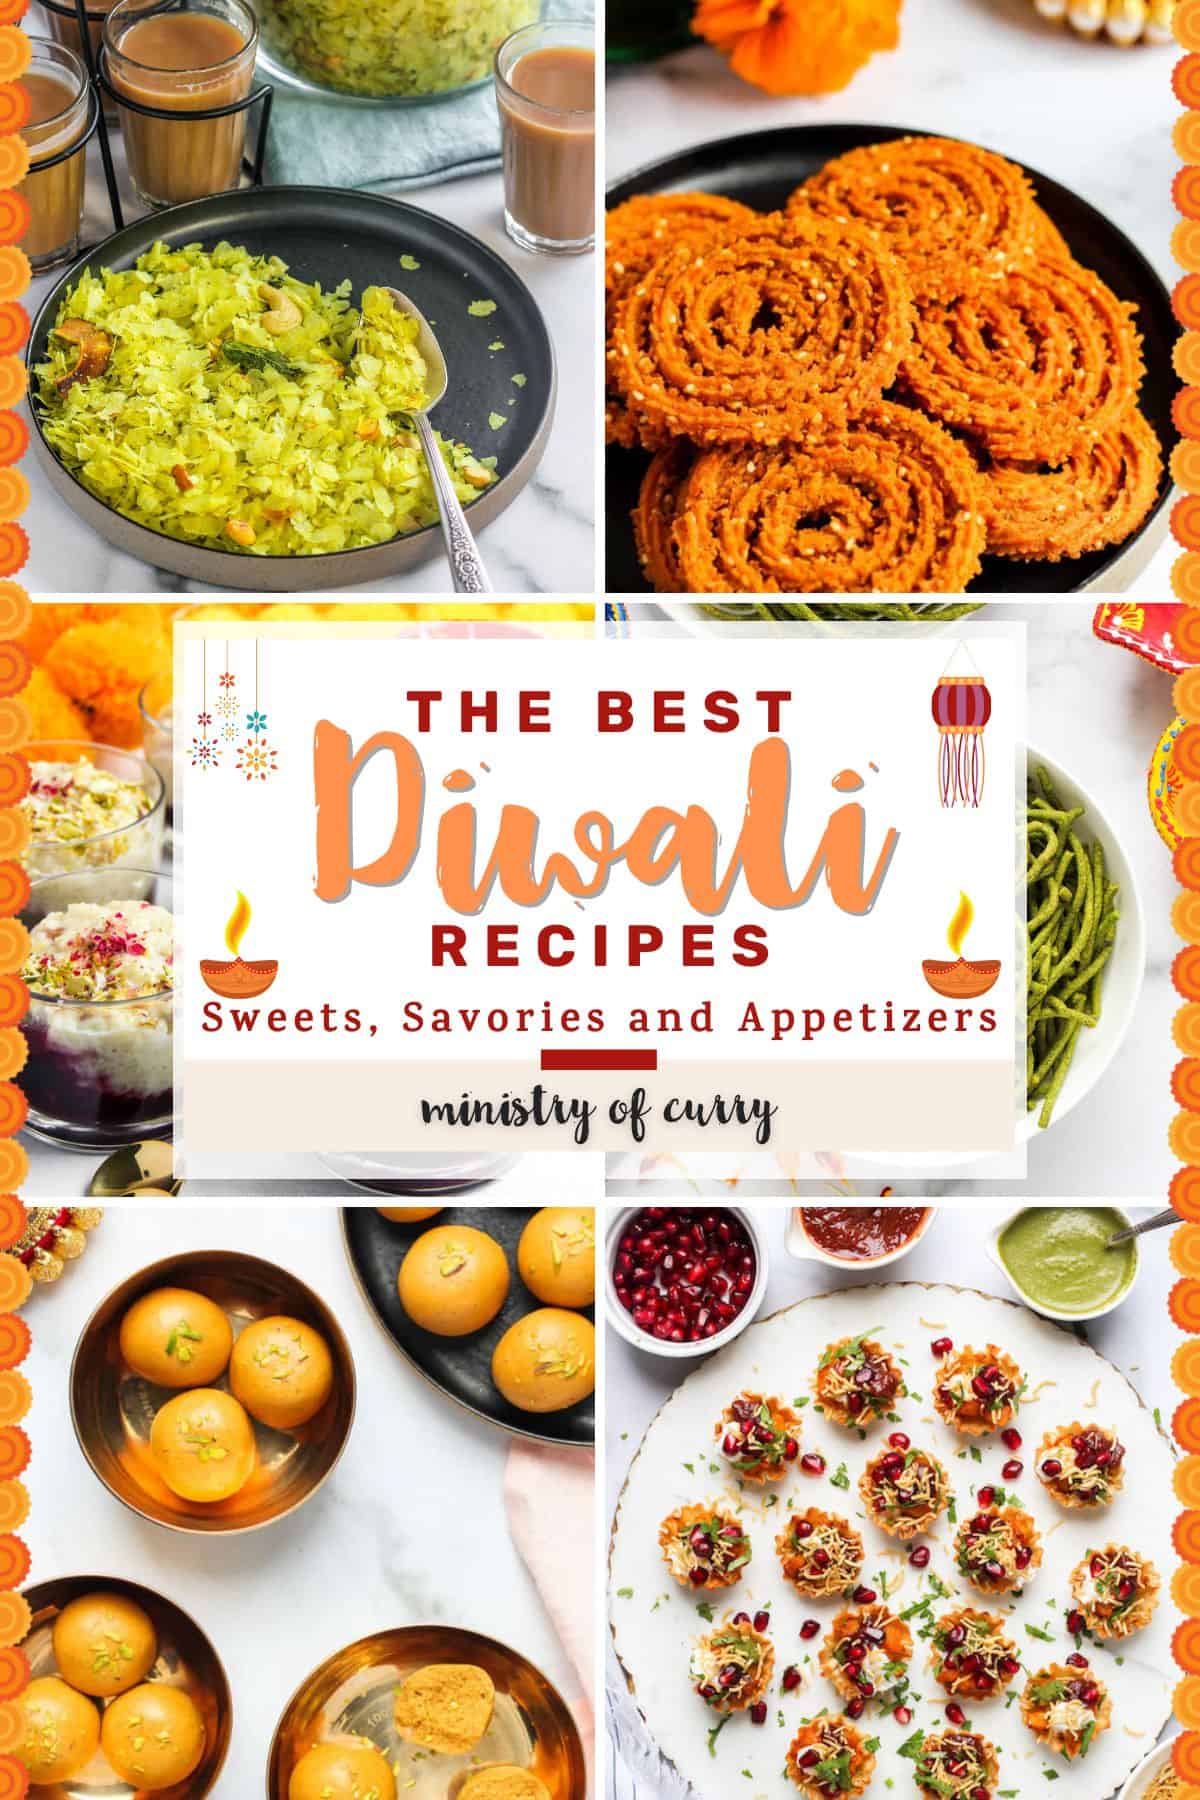 Diwali recipes photo collage 